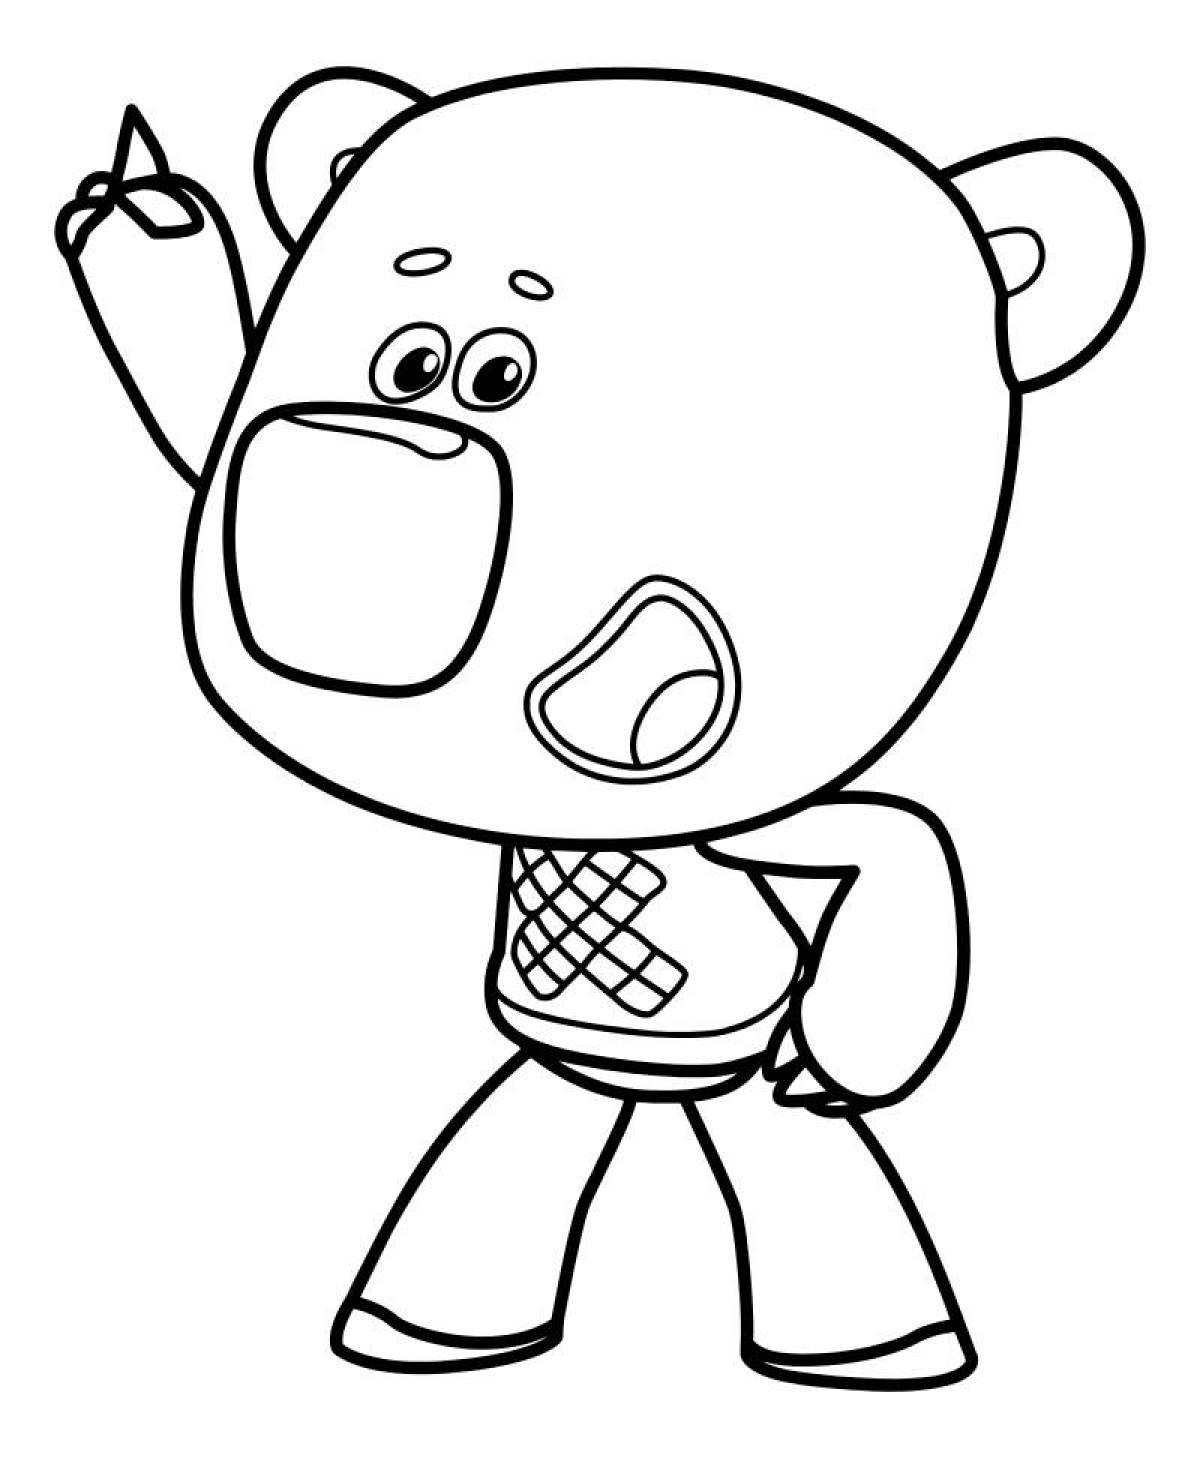 Раскраски huggable bears для детей